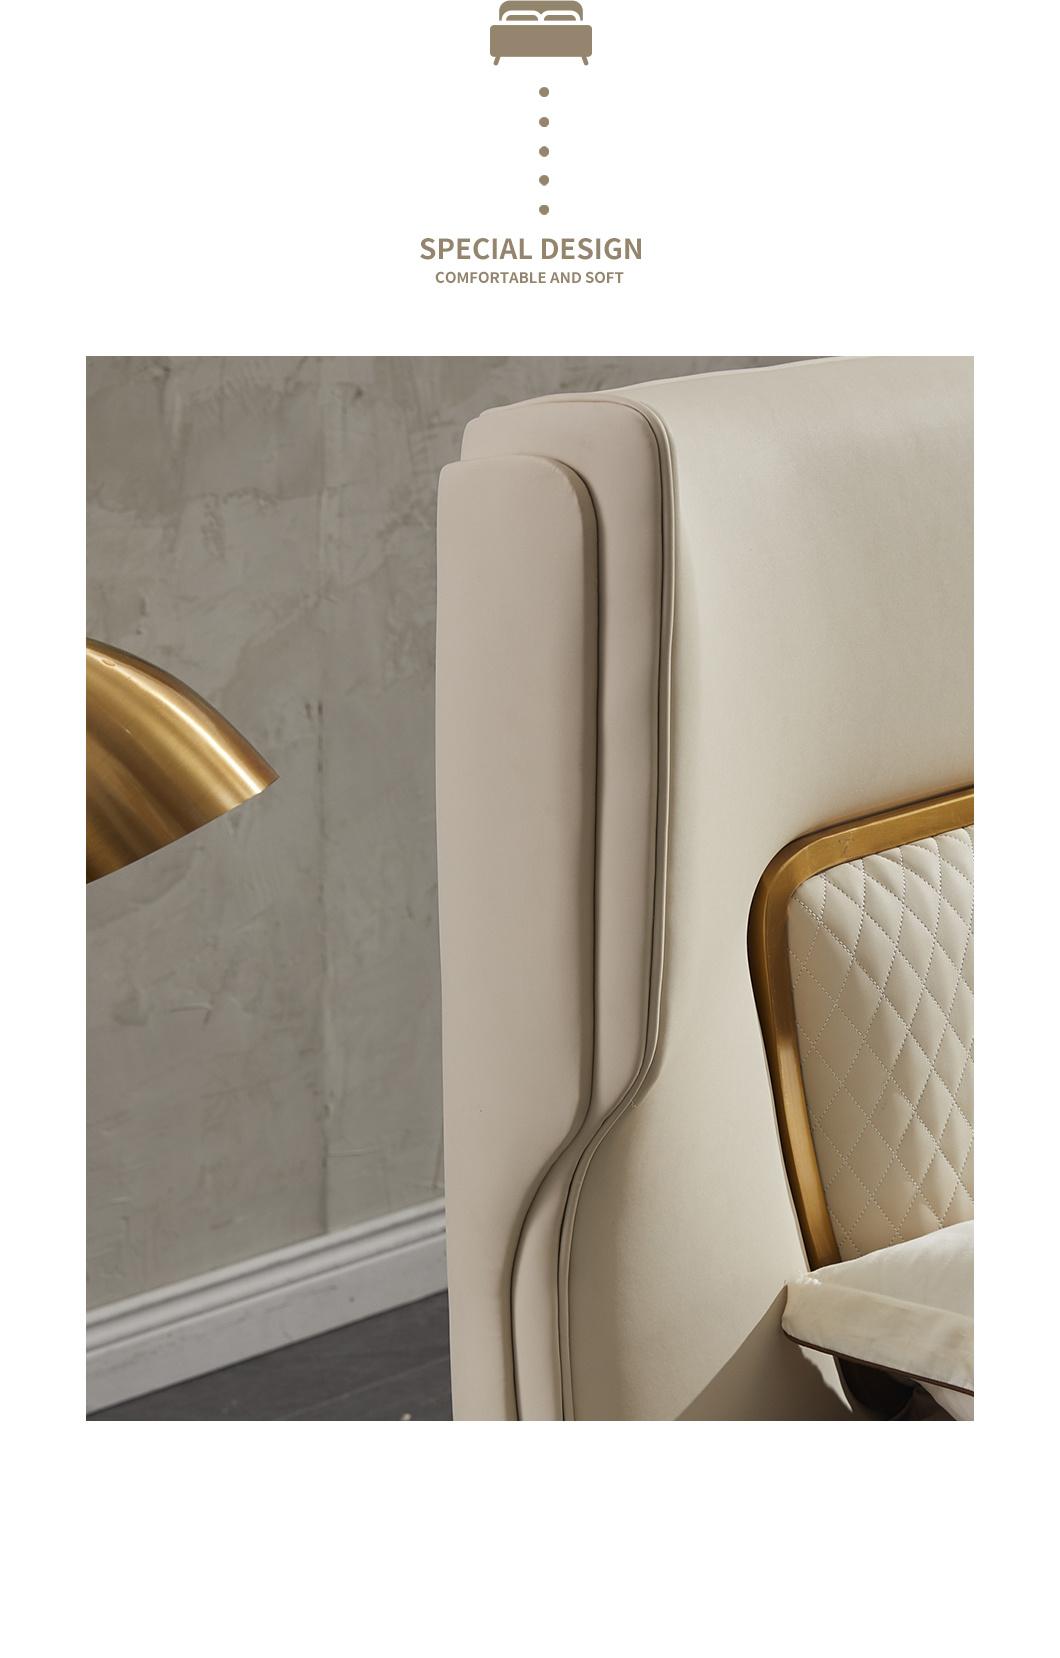 China Supplier Simple Design Hotel Bedroom Leather Bed Modern Furniture